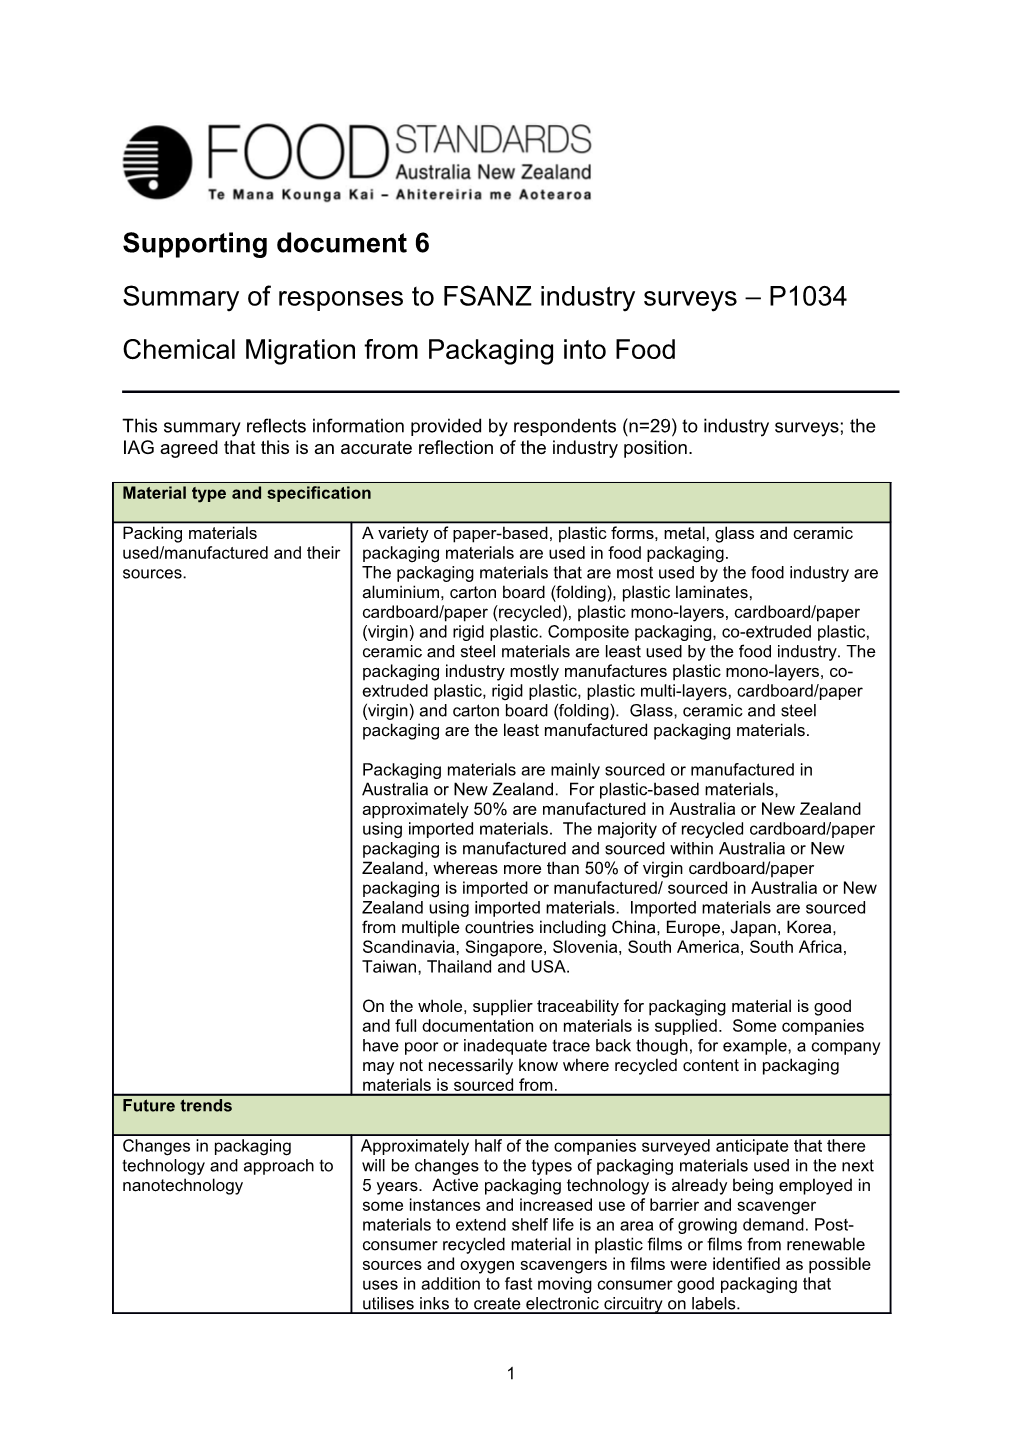 Summary of Responses to FSANZ Industry Surveys P1034